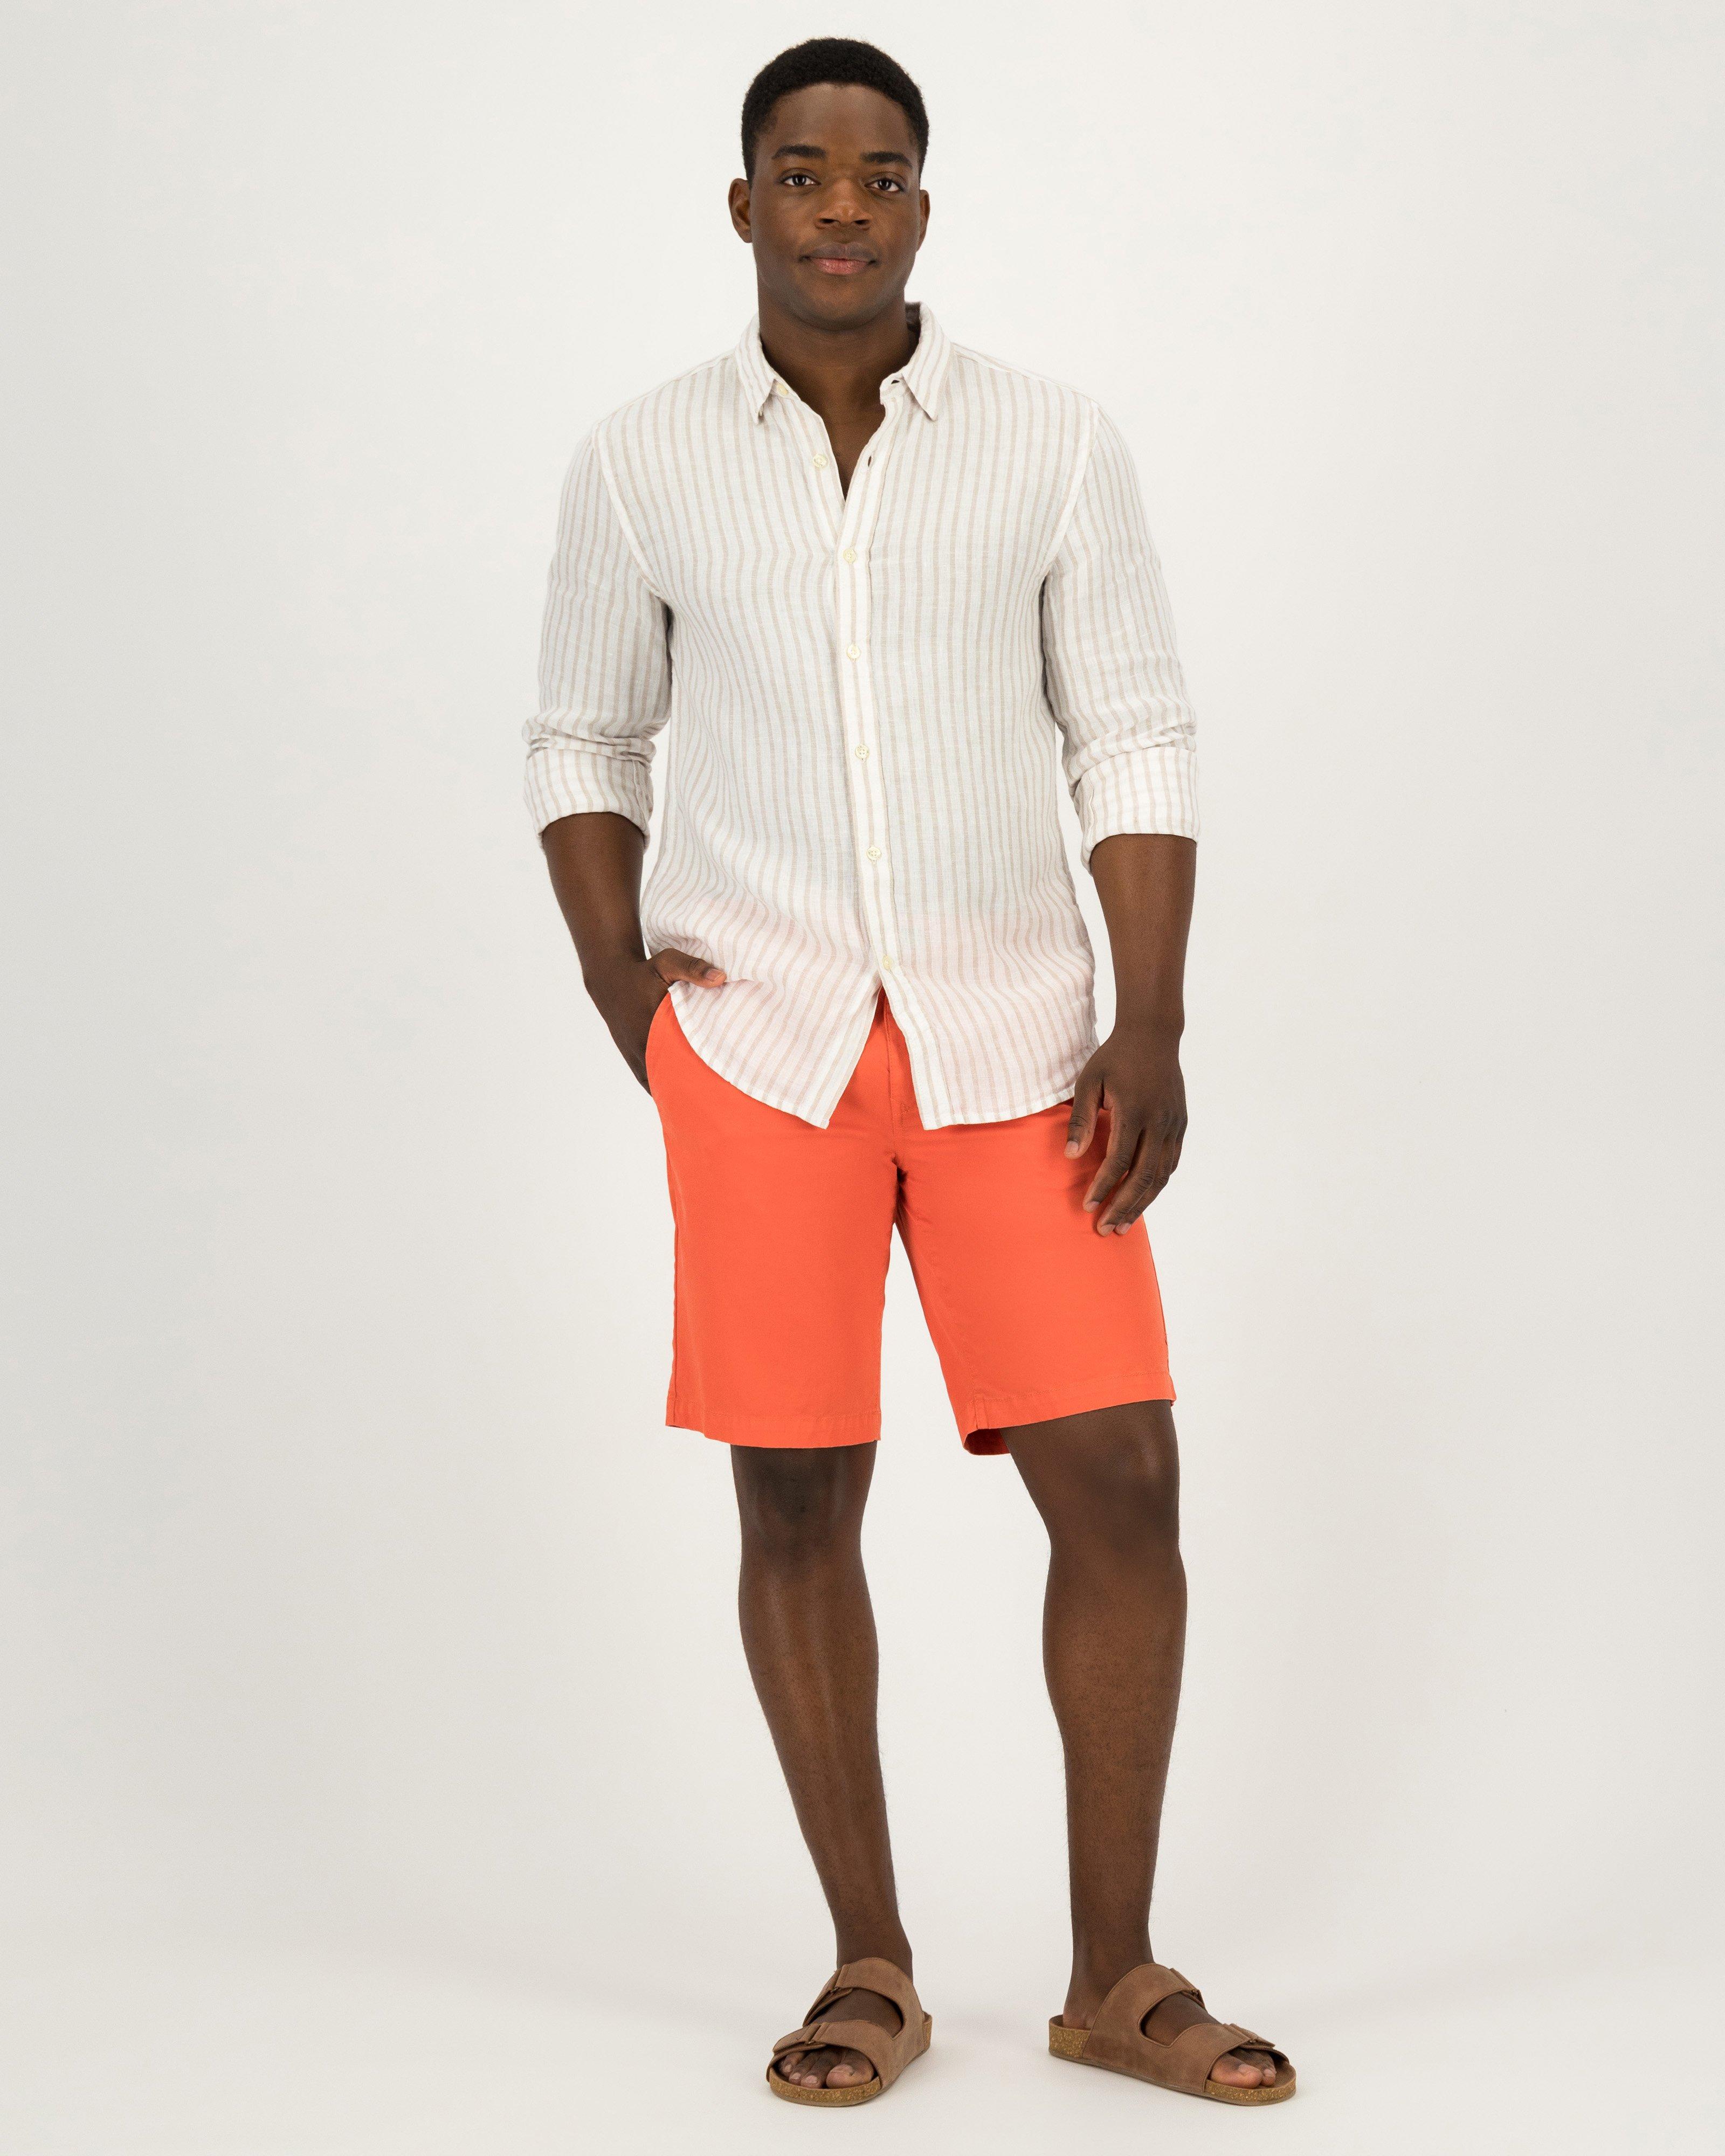 Men's Harvey Shorts -  Coral